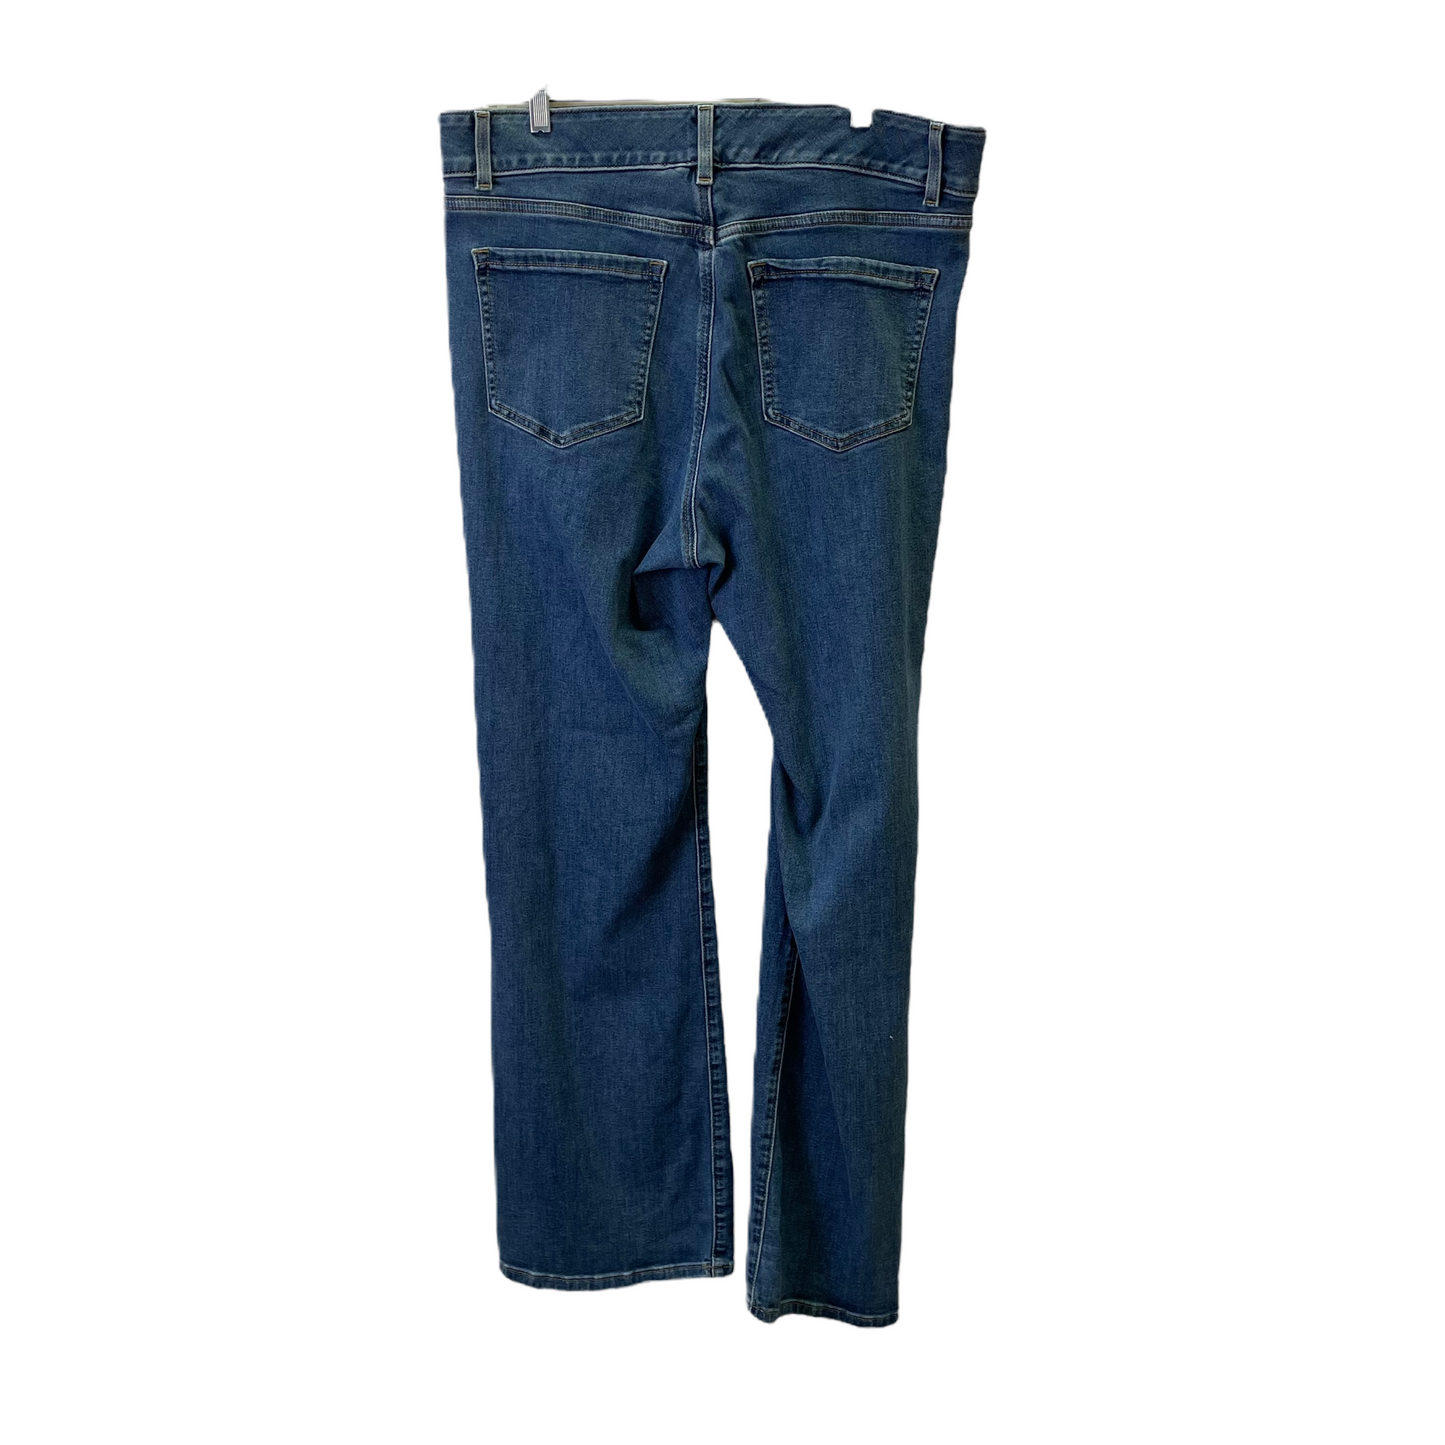 Blue Denim Jeans Boot Cut By Lane Bryant, Size: 16